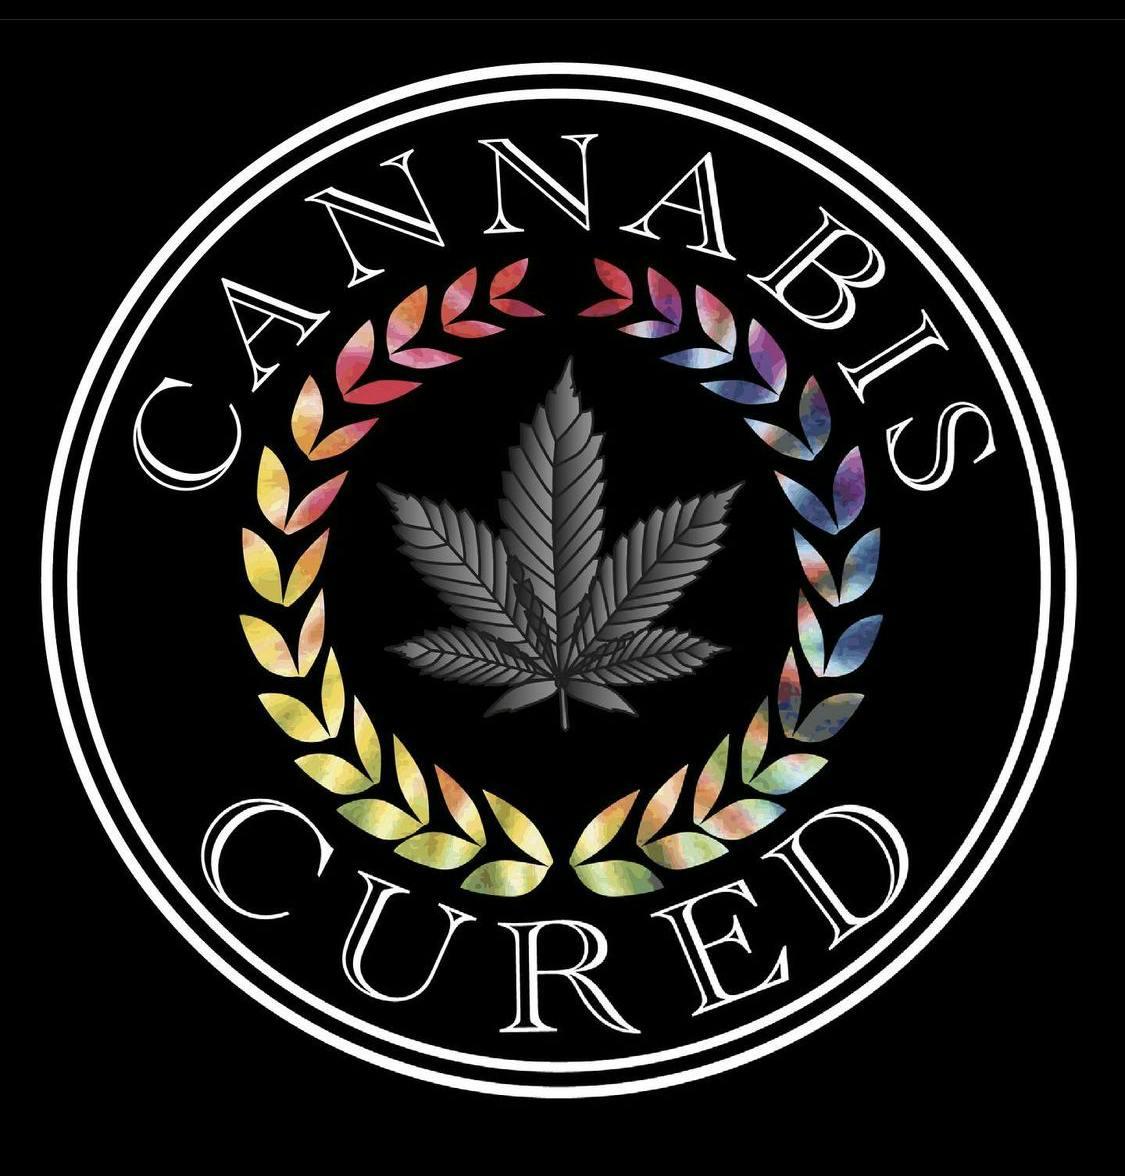 Cannabis Cured Recreational Weed Dispensary Fairfield